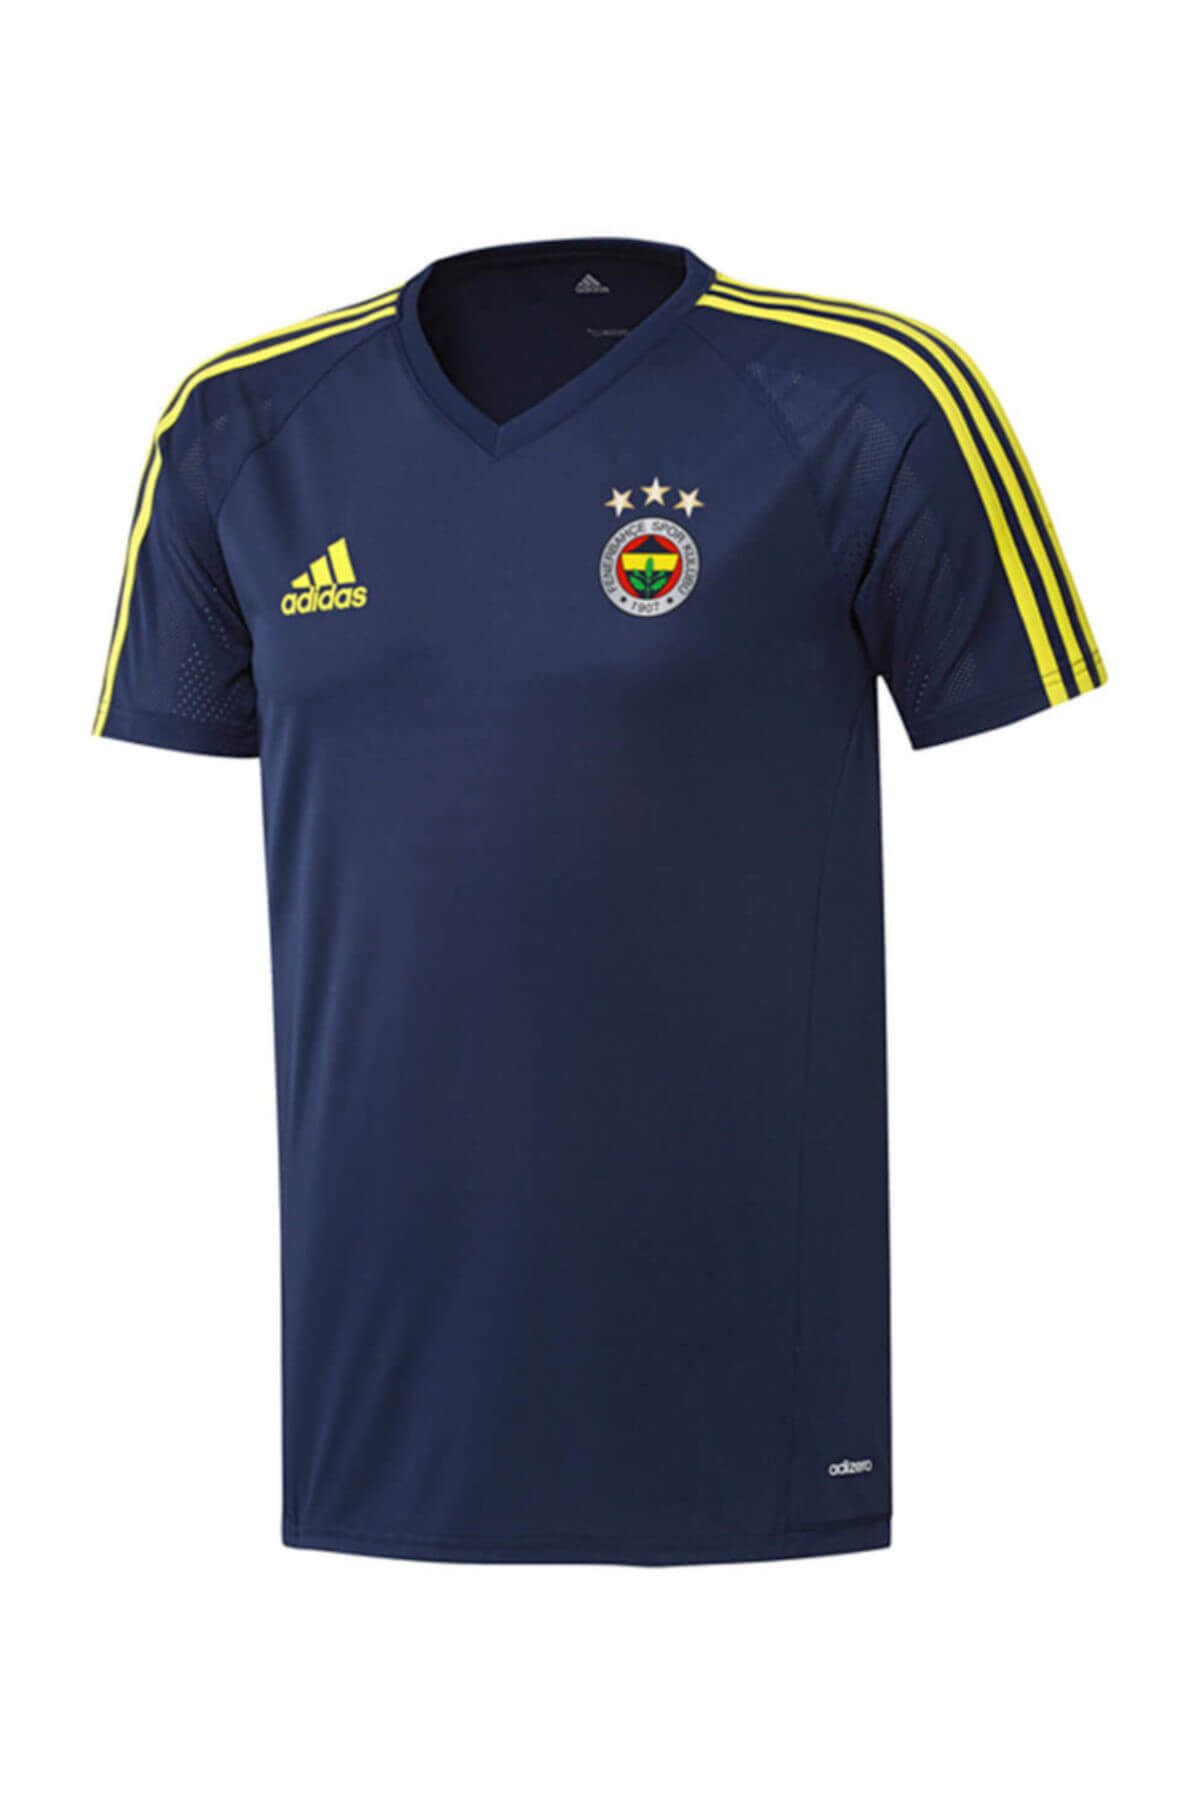 Fenerbahçe Fen Trg Jsy Mavi Erkek Forma 100293528